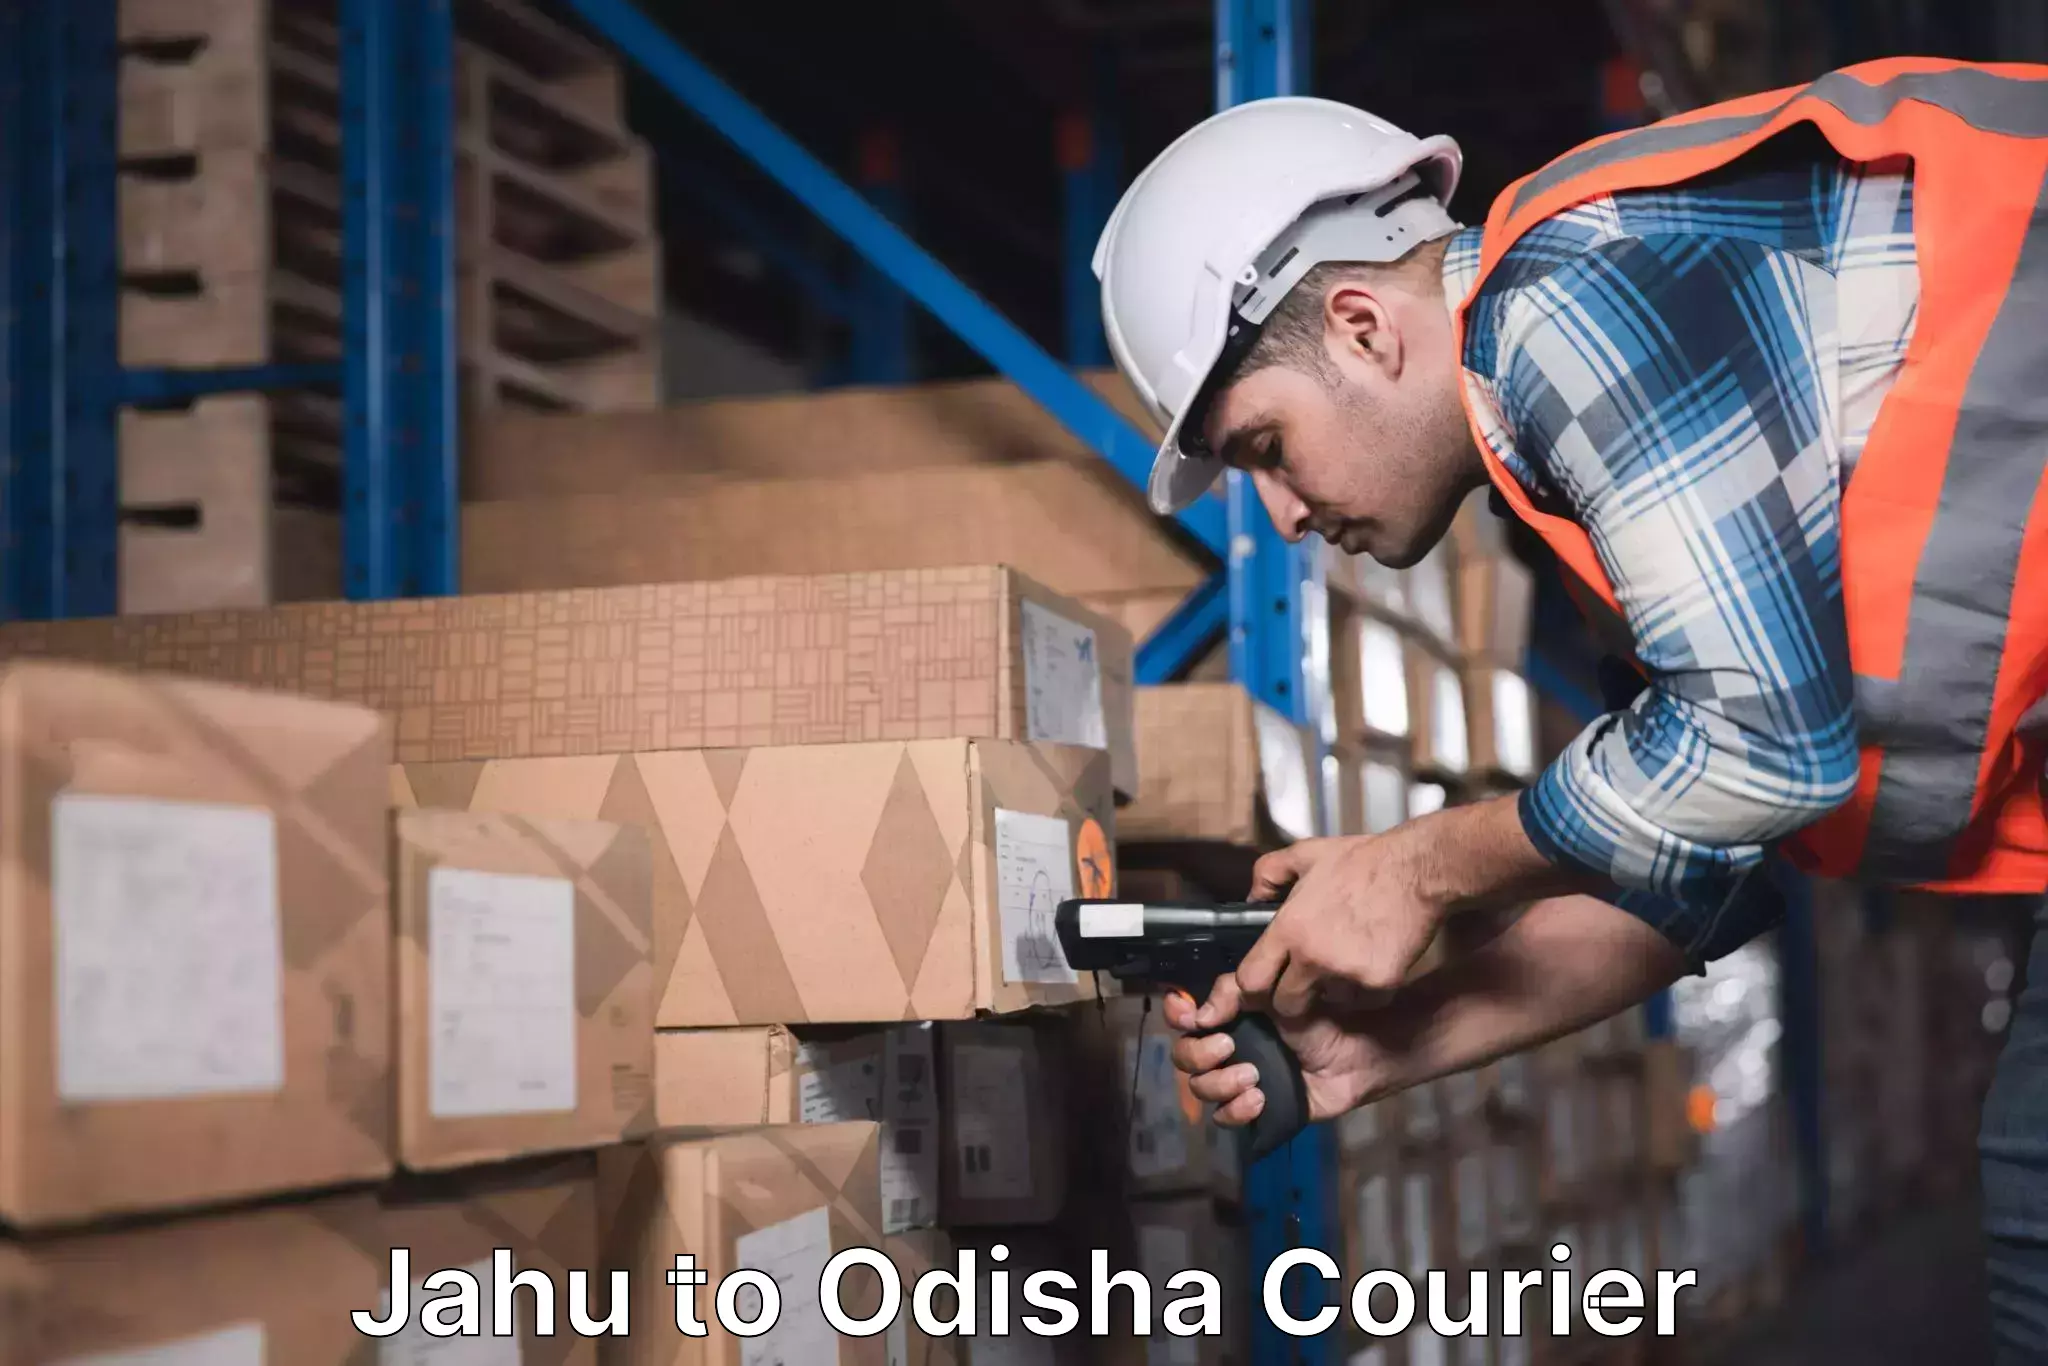 Next-day delivery options Jahu to Odisha